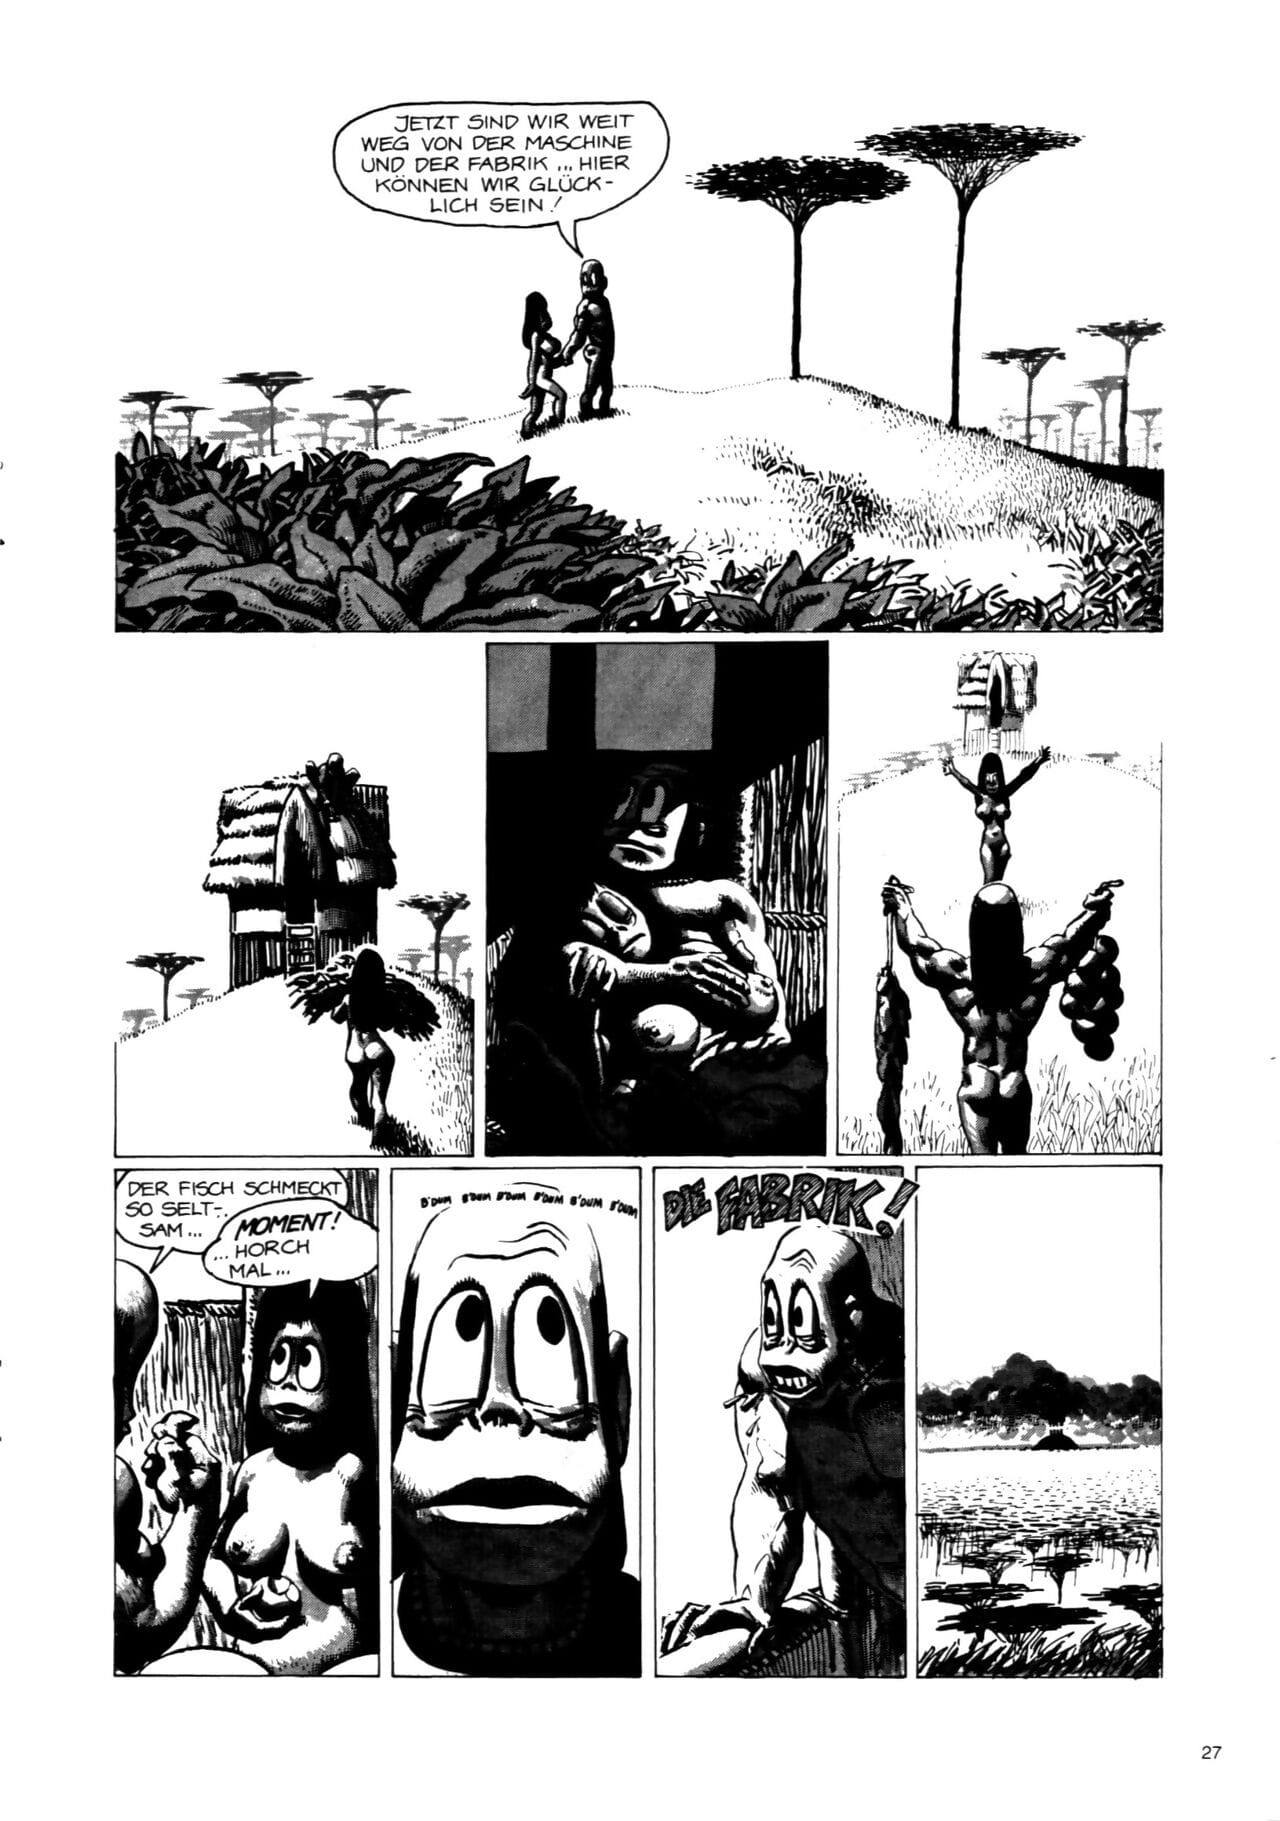 schwermetall #054 PART 2 page 1